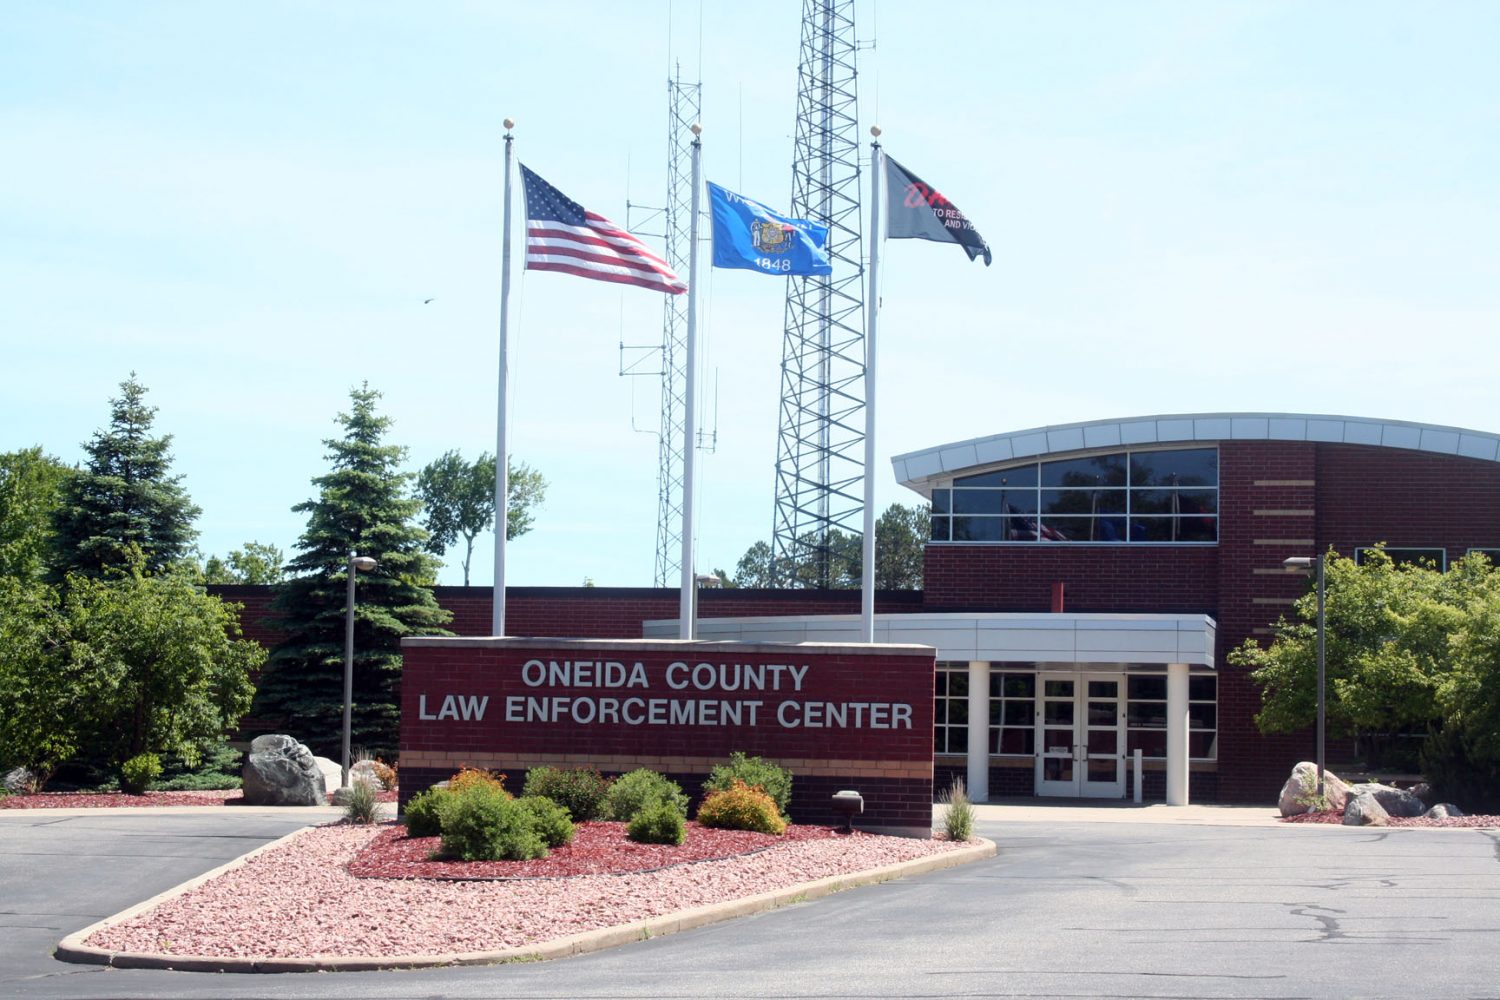 Oneida County Law Enforcement Center